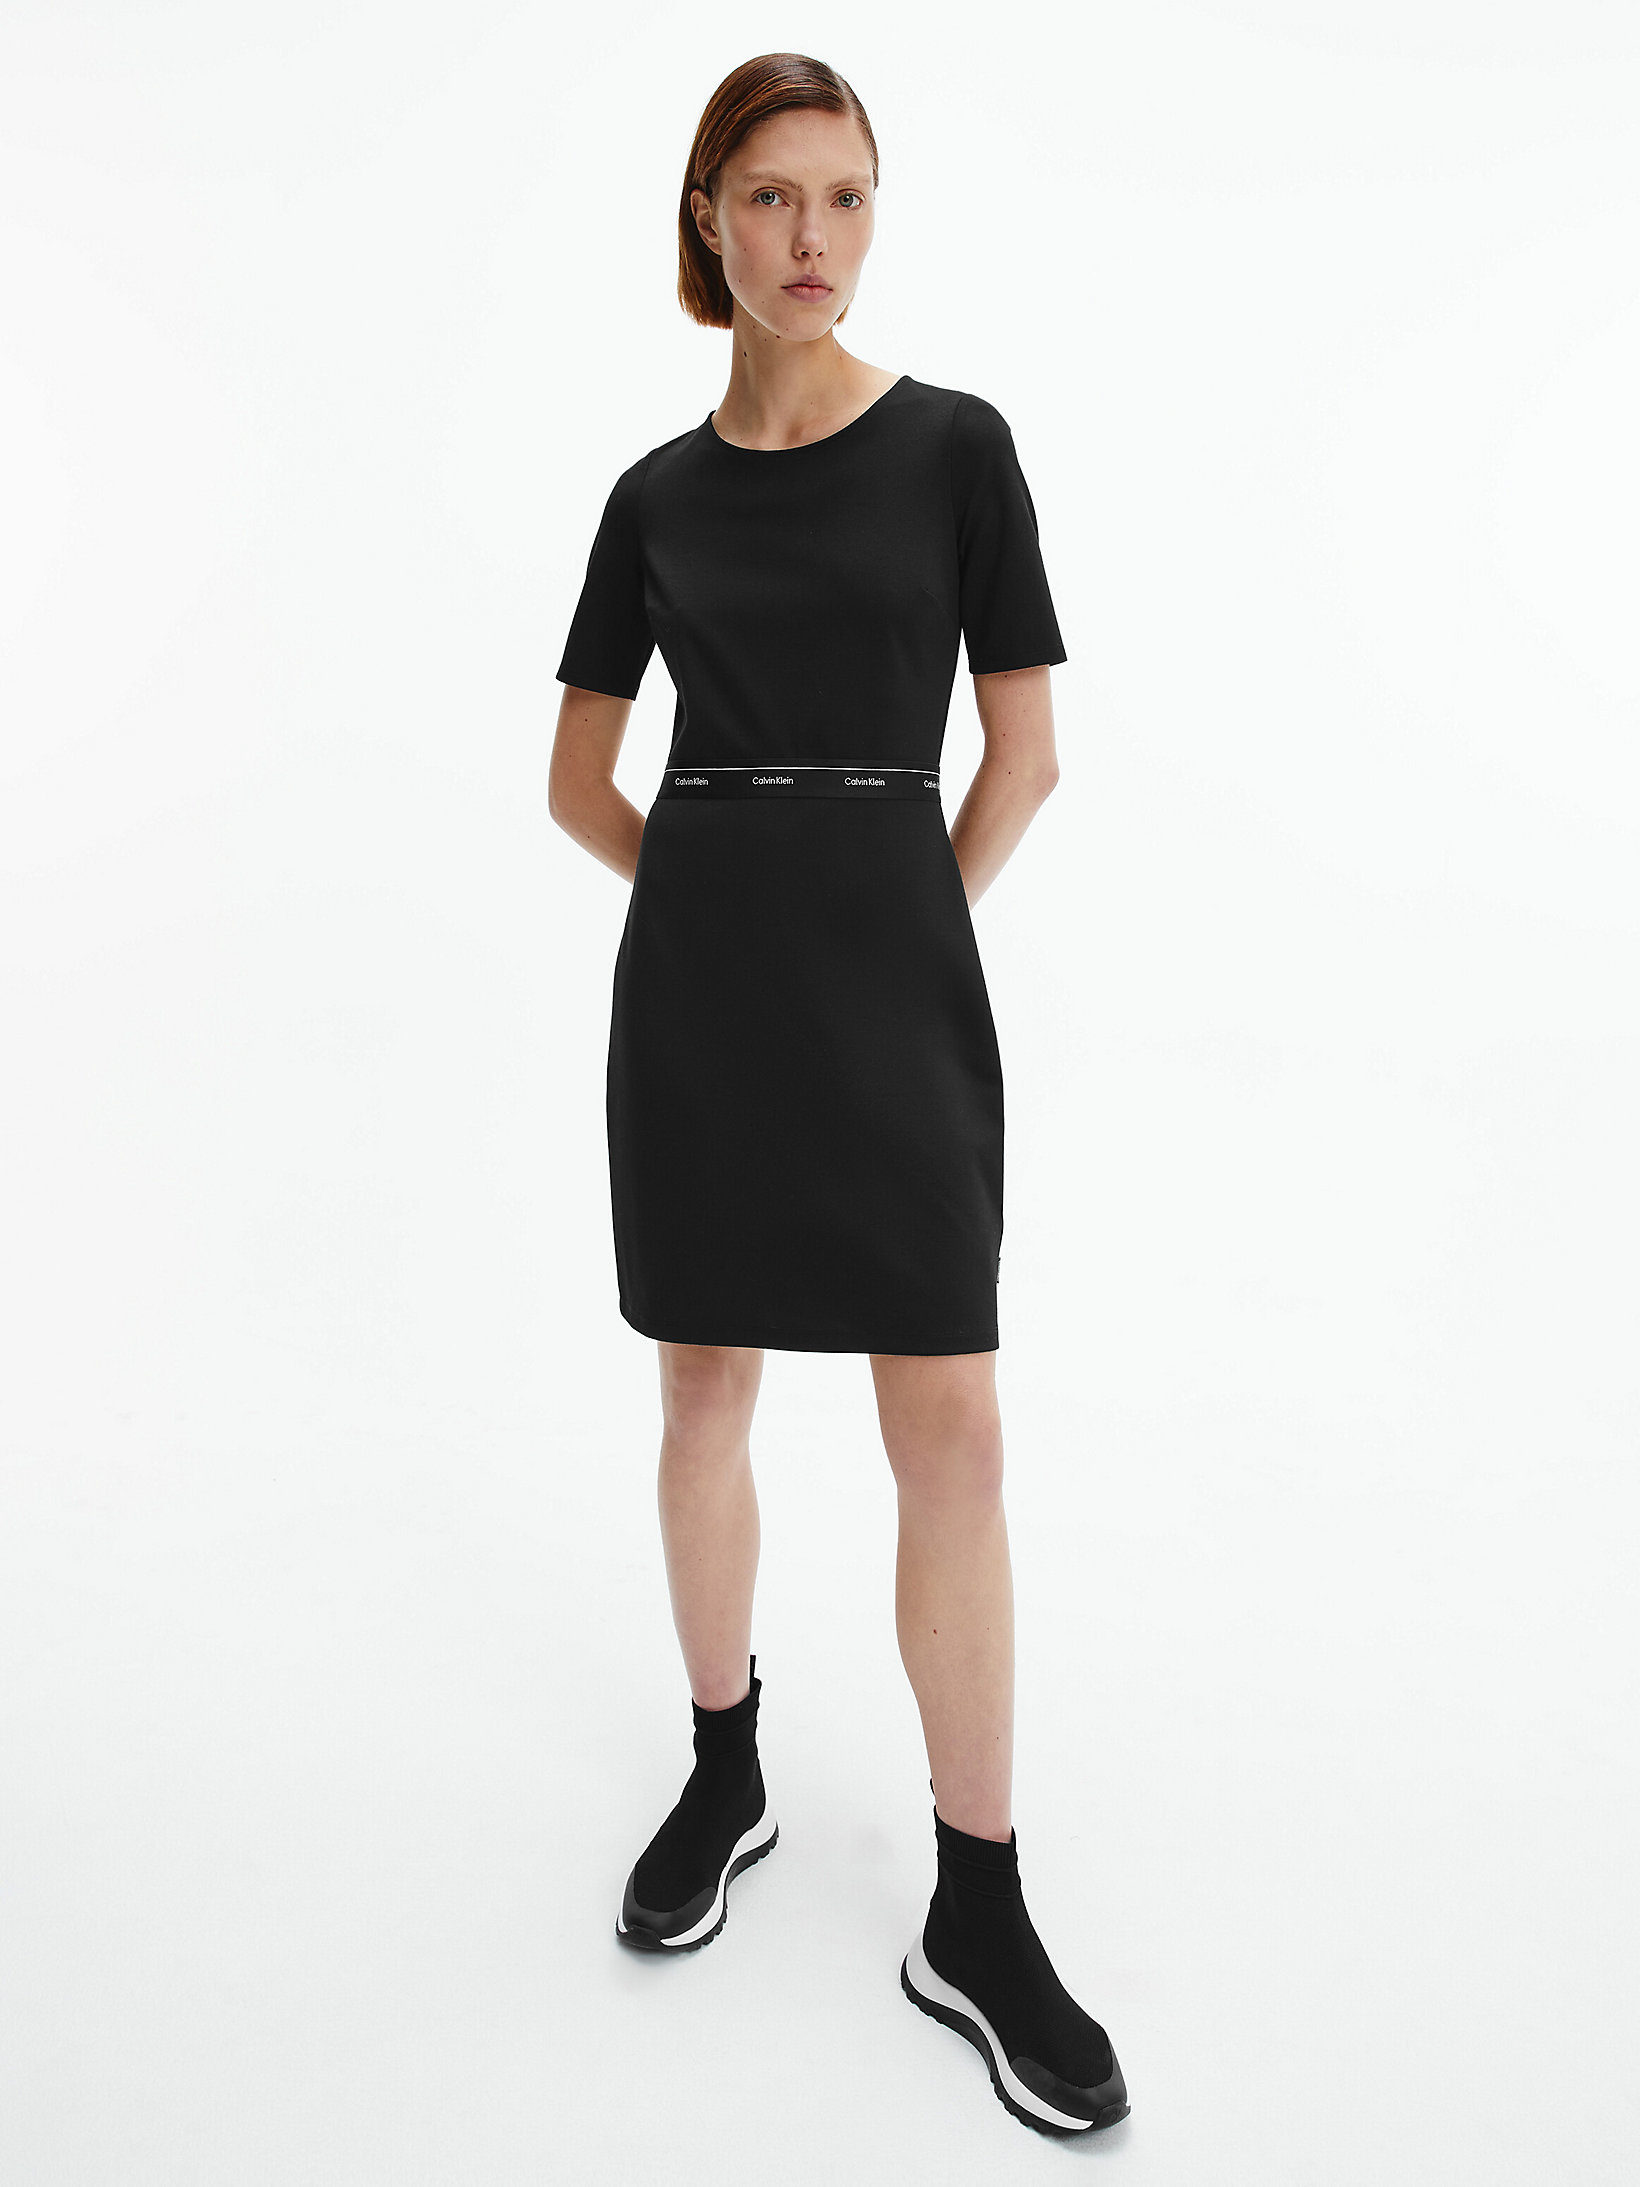 CK Black Recycled Bodycon Dress undefined women Calvin Klein